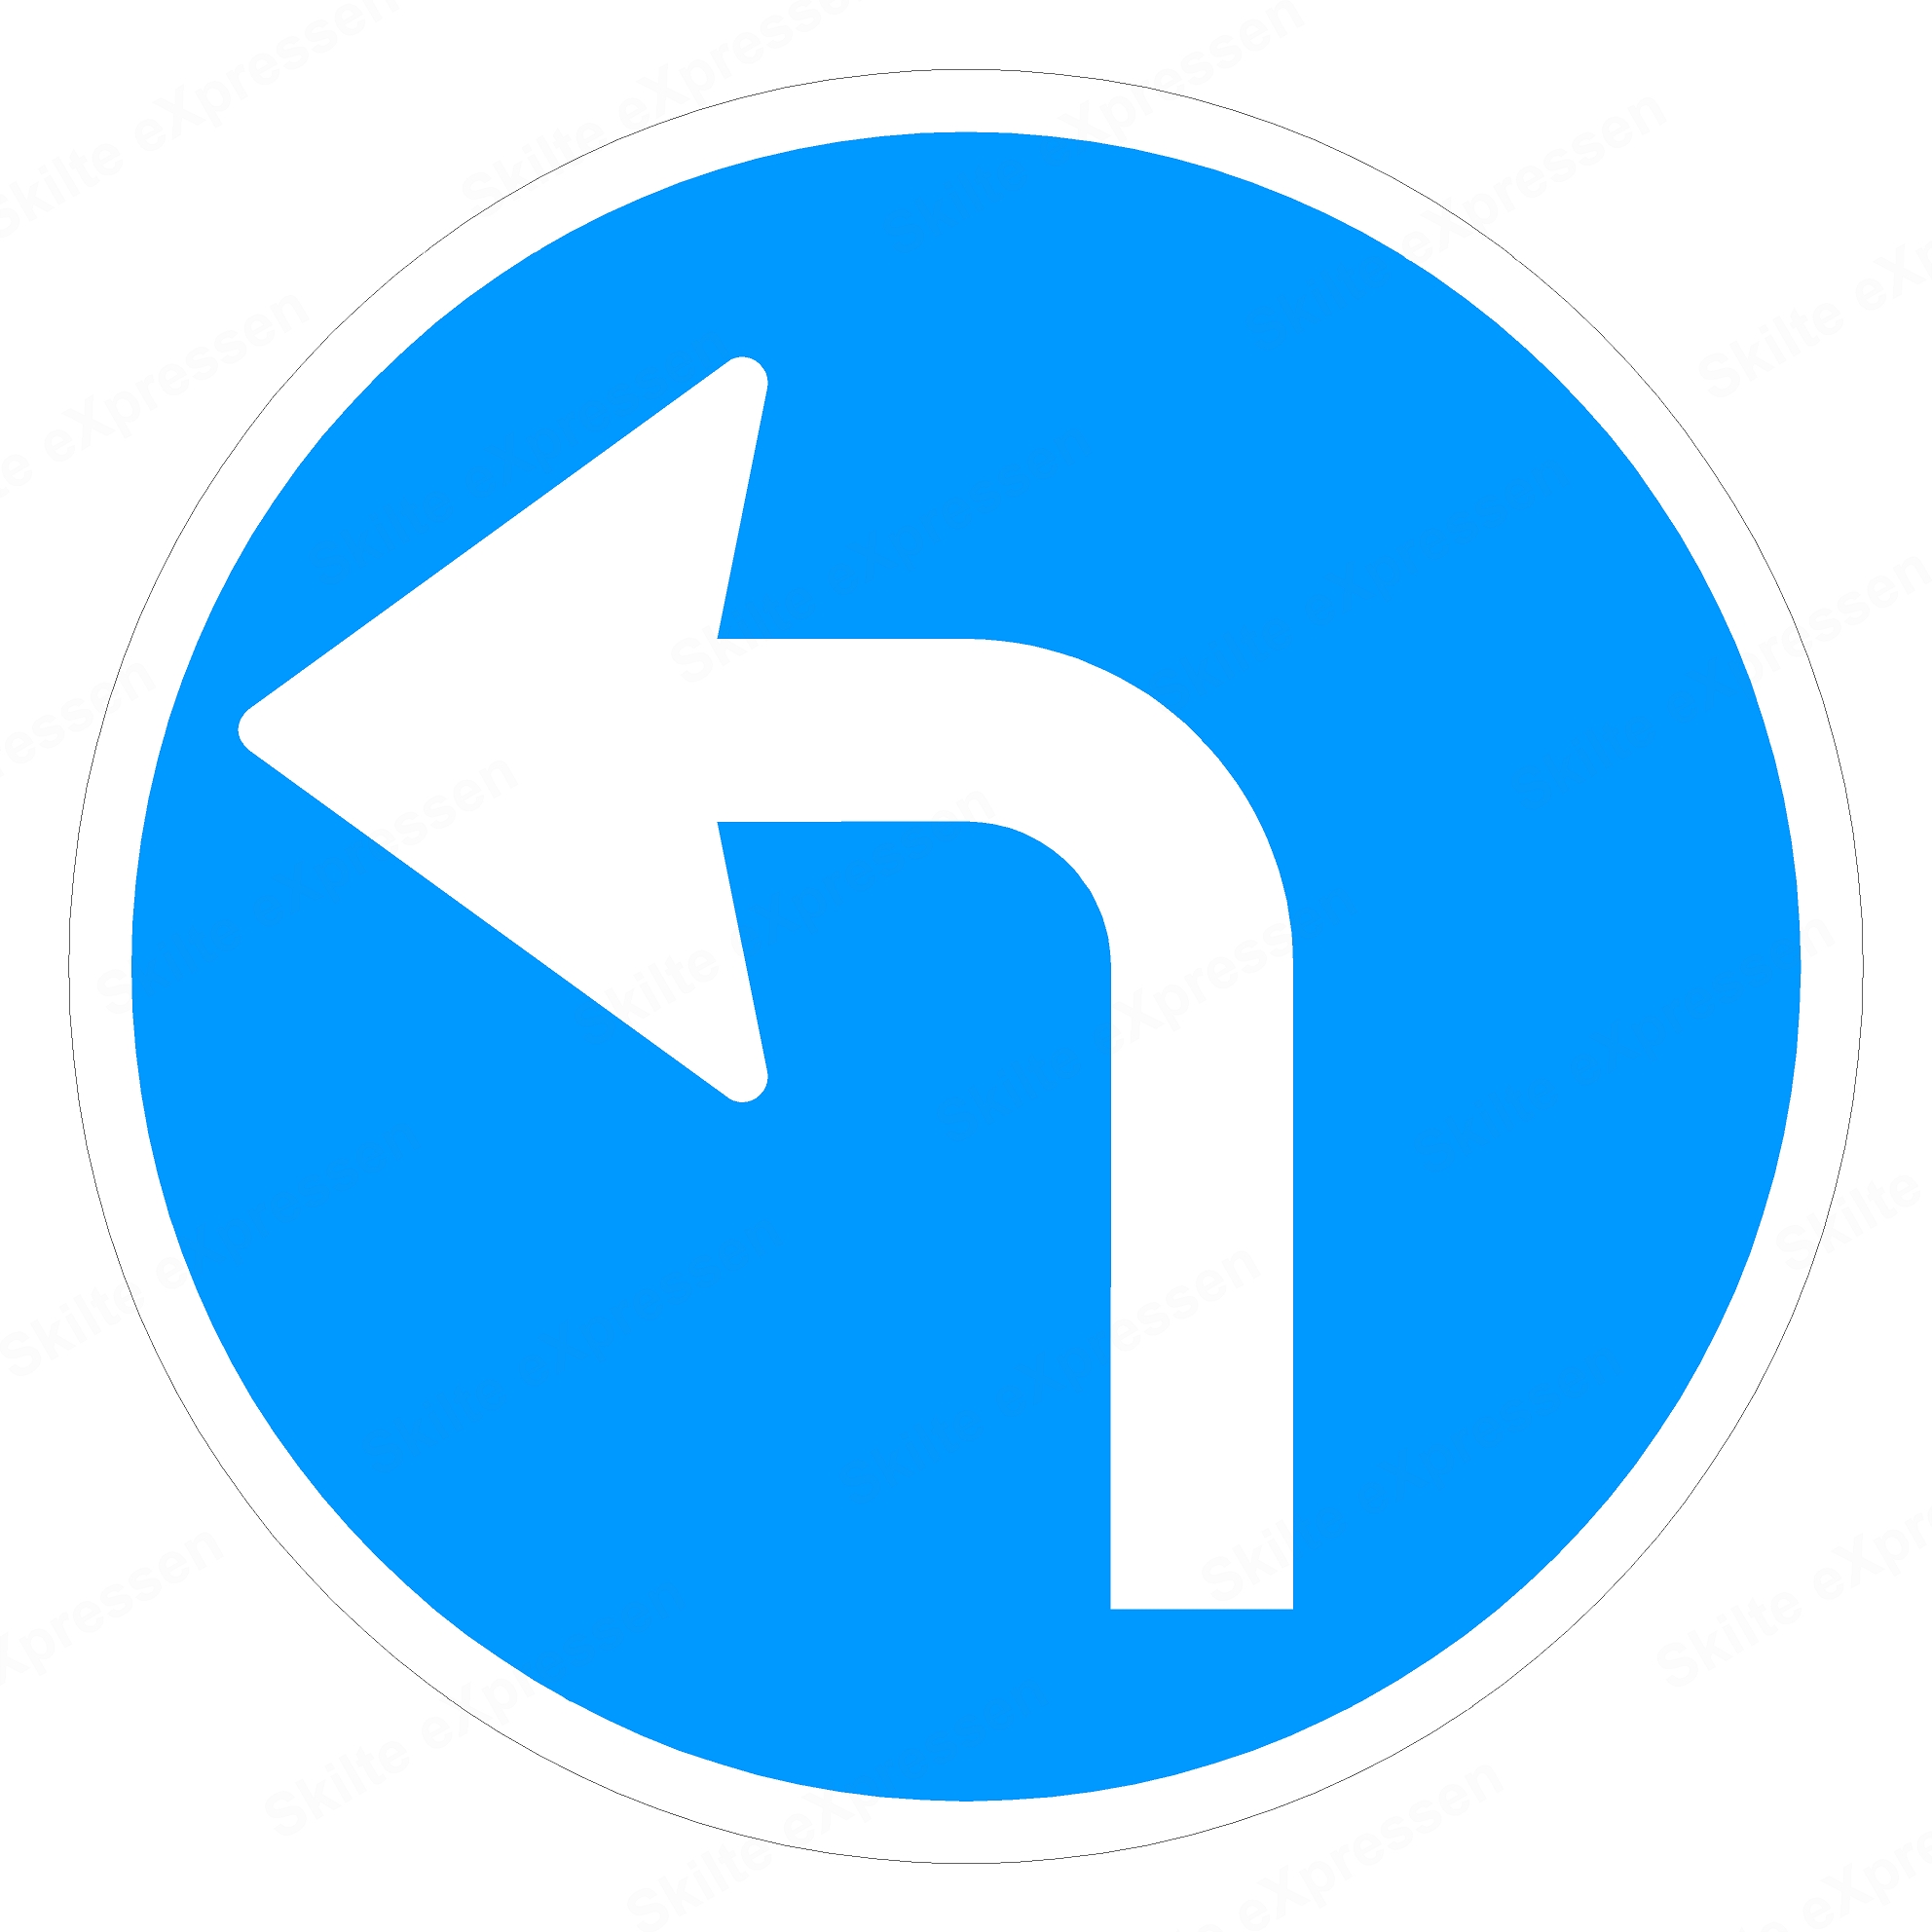 Turn ru. Дорожный знак движение направо. Дорожный знак поворот. Знак поворот налево. Знаки дорожного движения поворот направо.